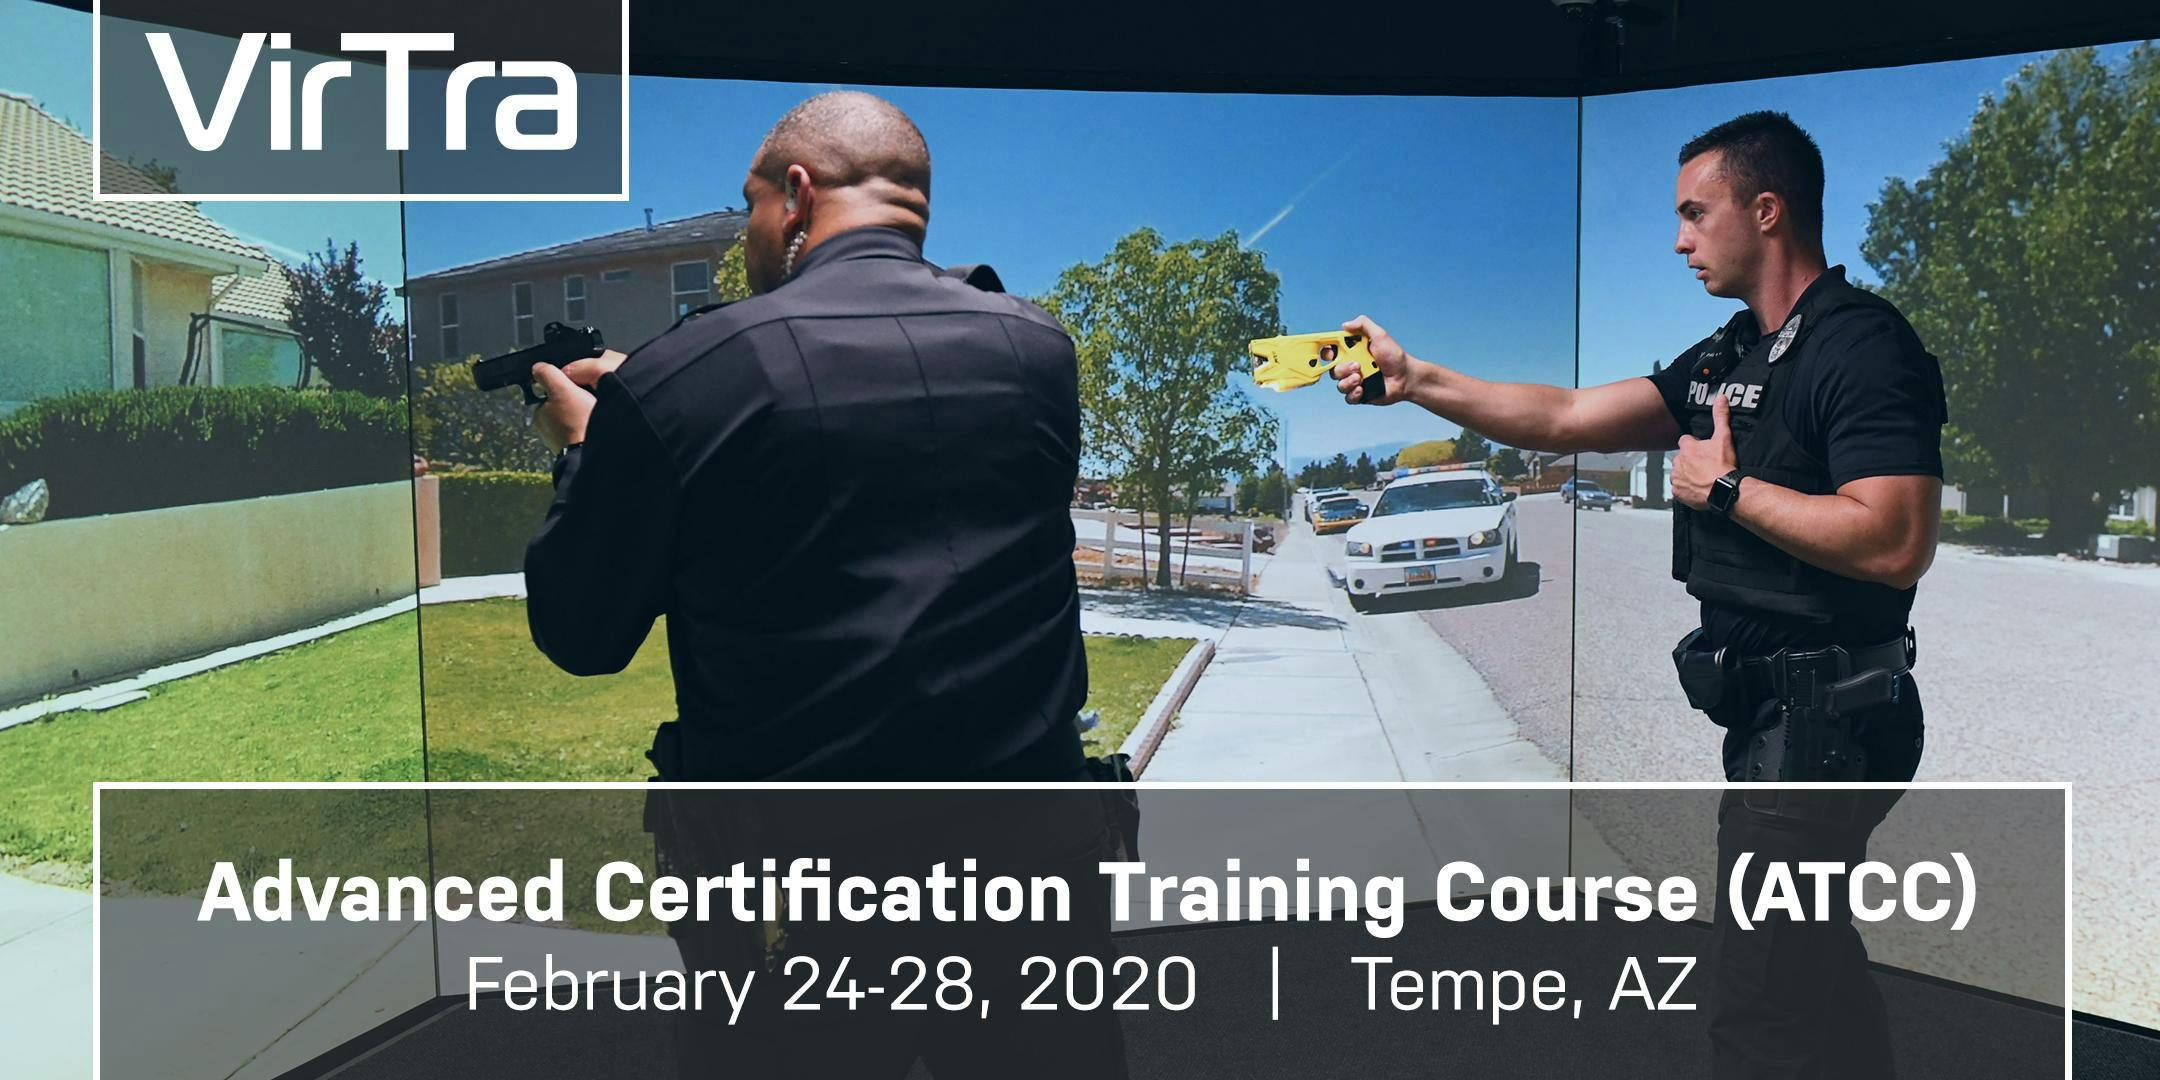 VirTra Advanced Trainer Certification Course (ATCC)